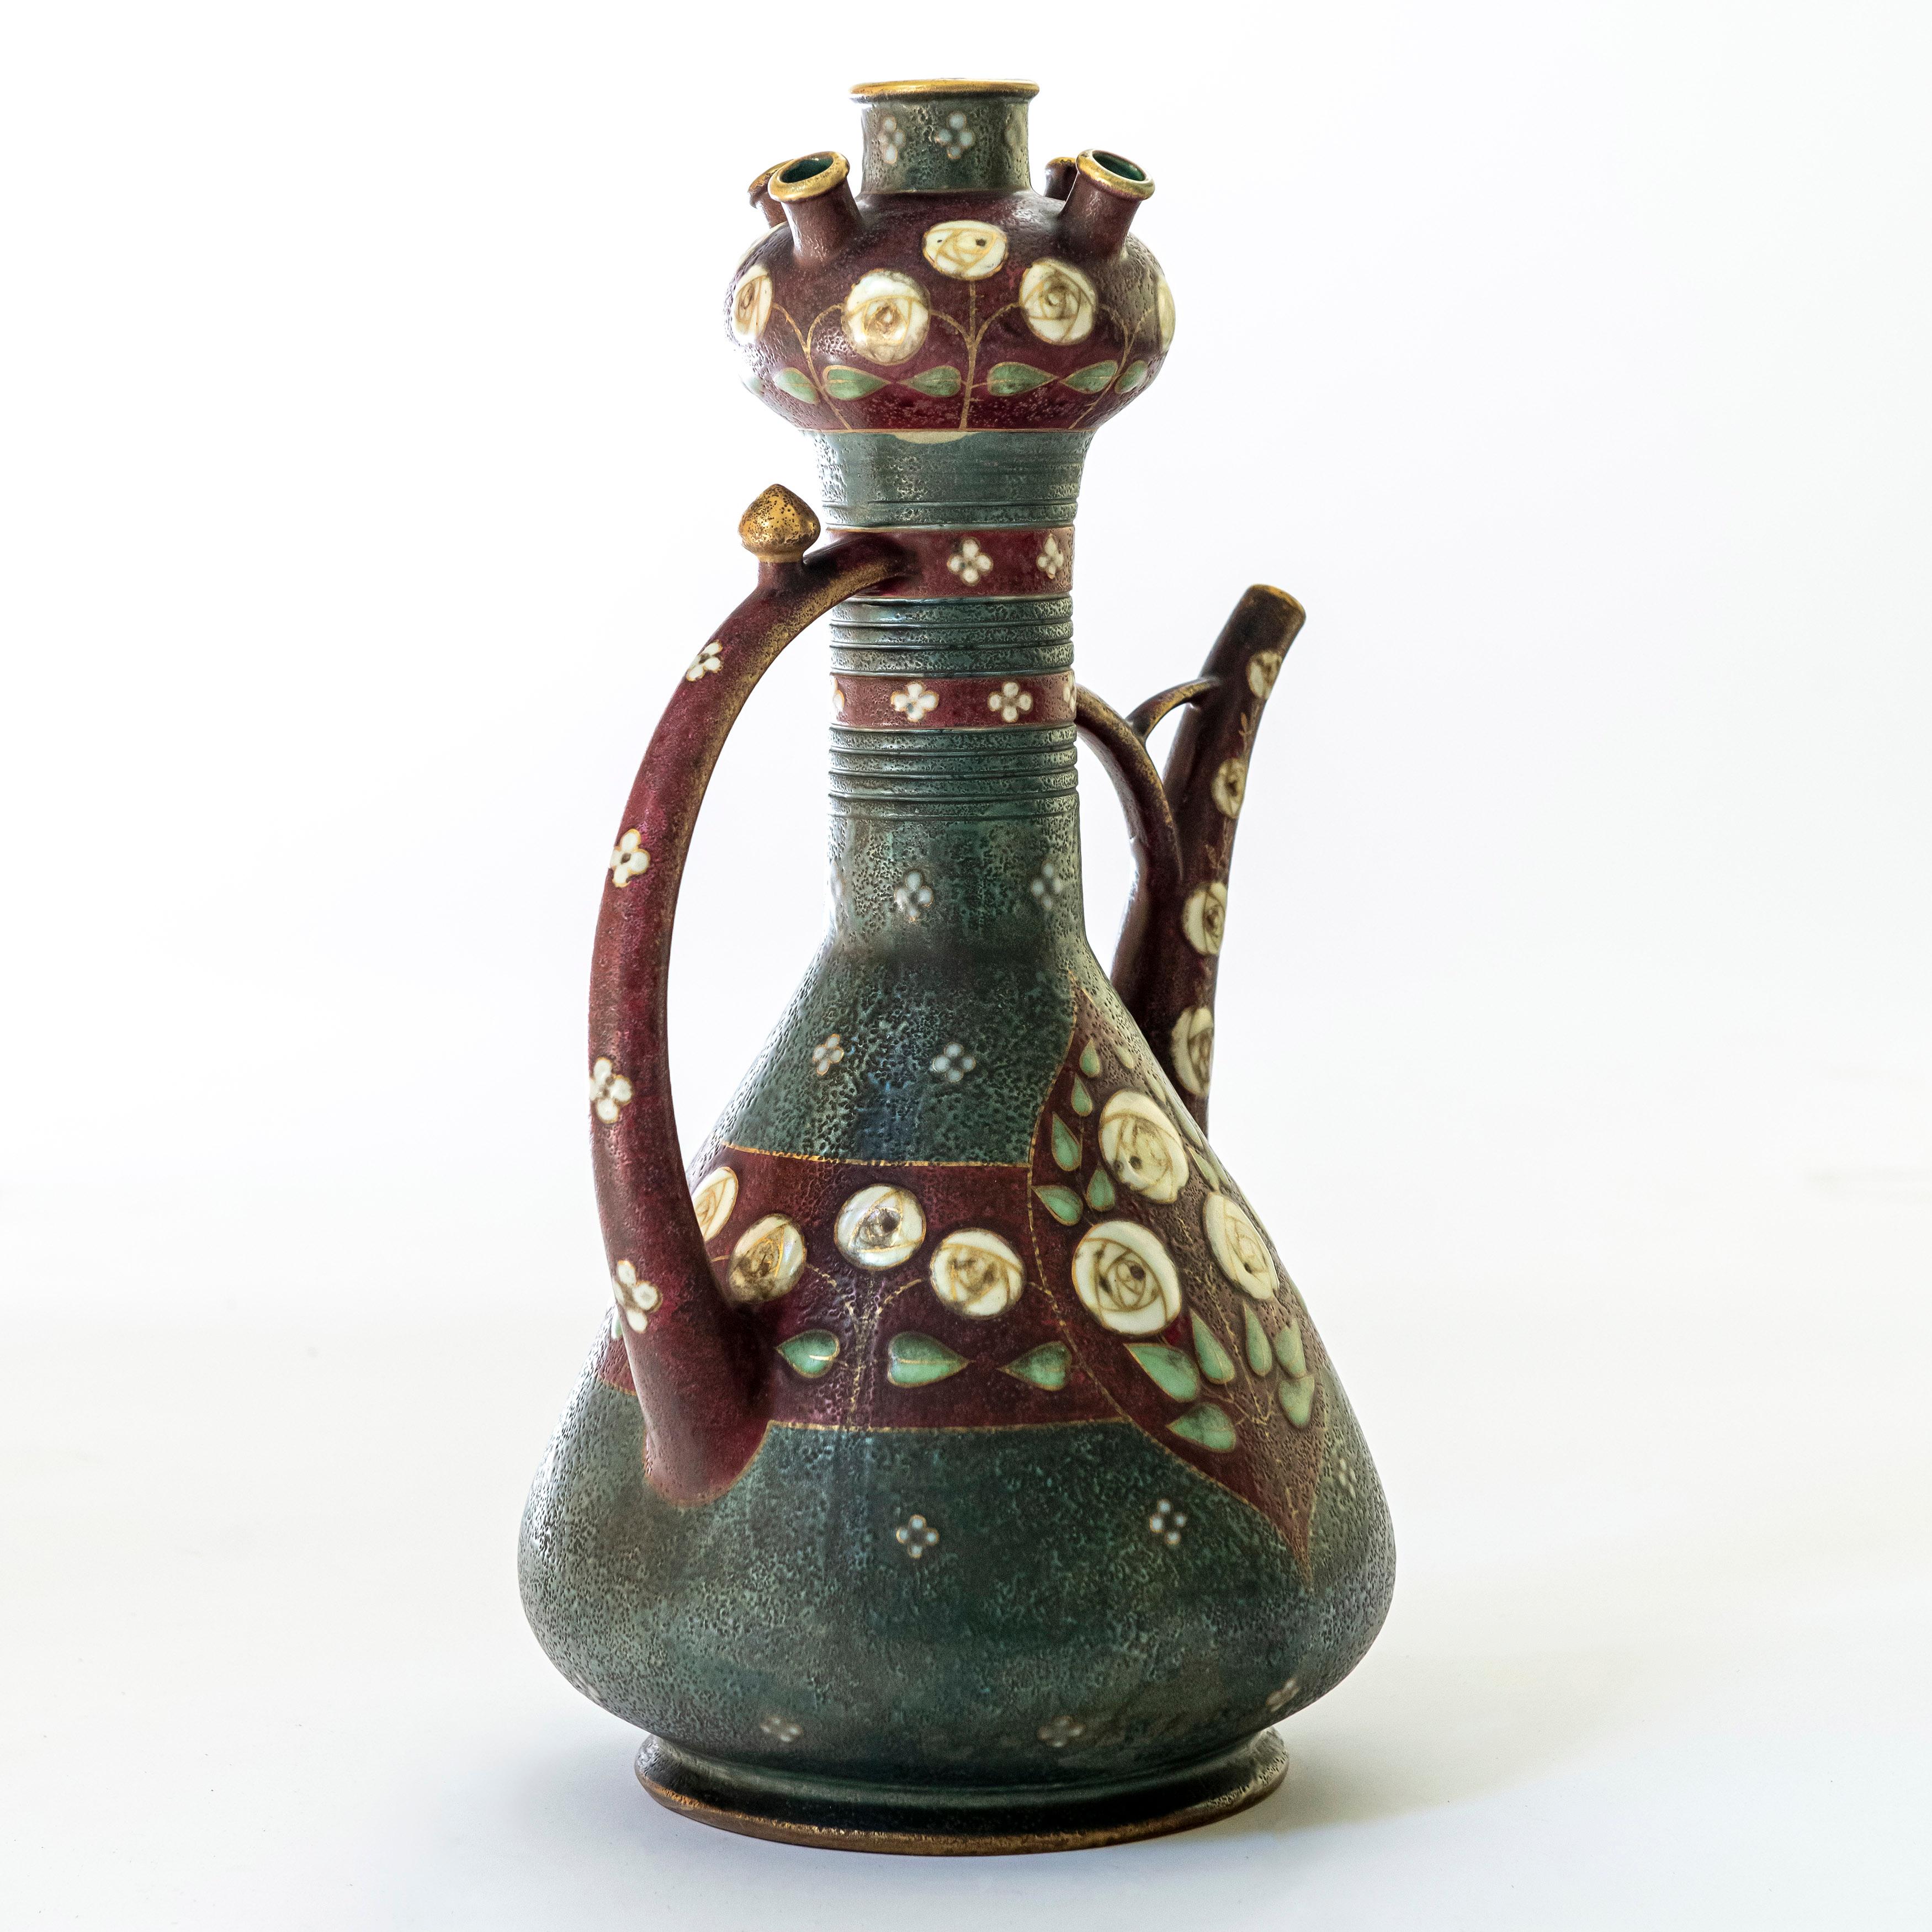 Ceramic vase signed Turn-Teplitz. Attributed to Paul Dachsel, Austria, circa 1900.